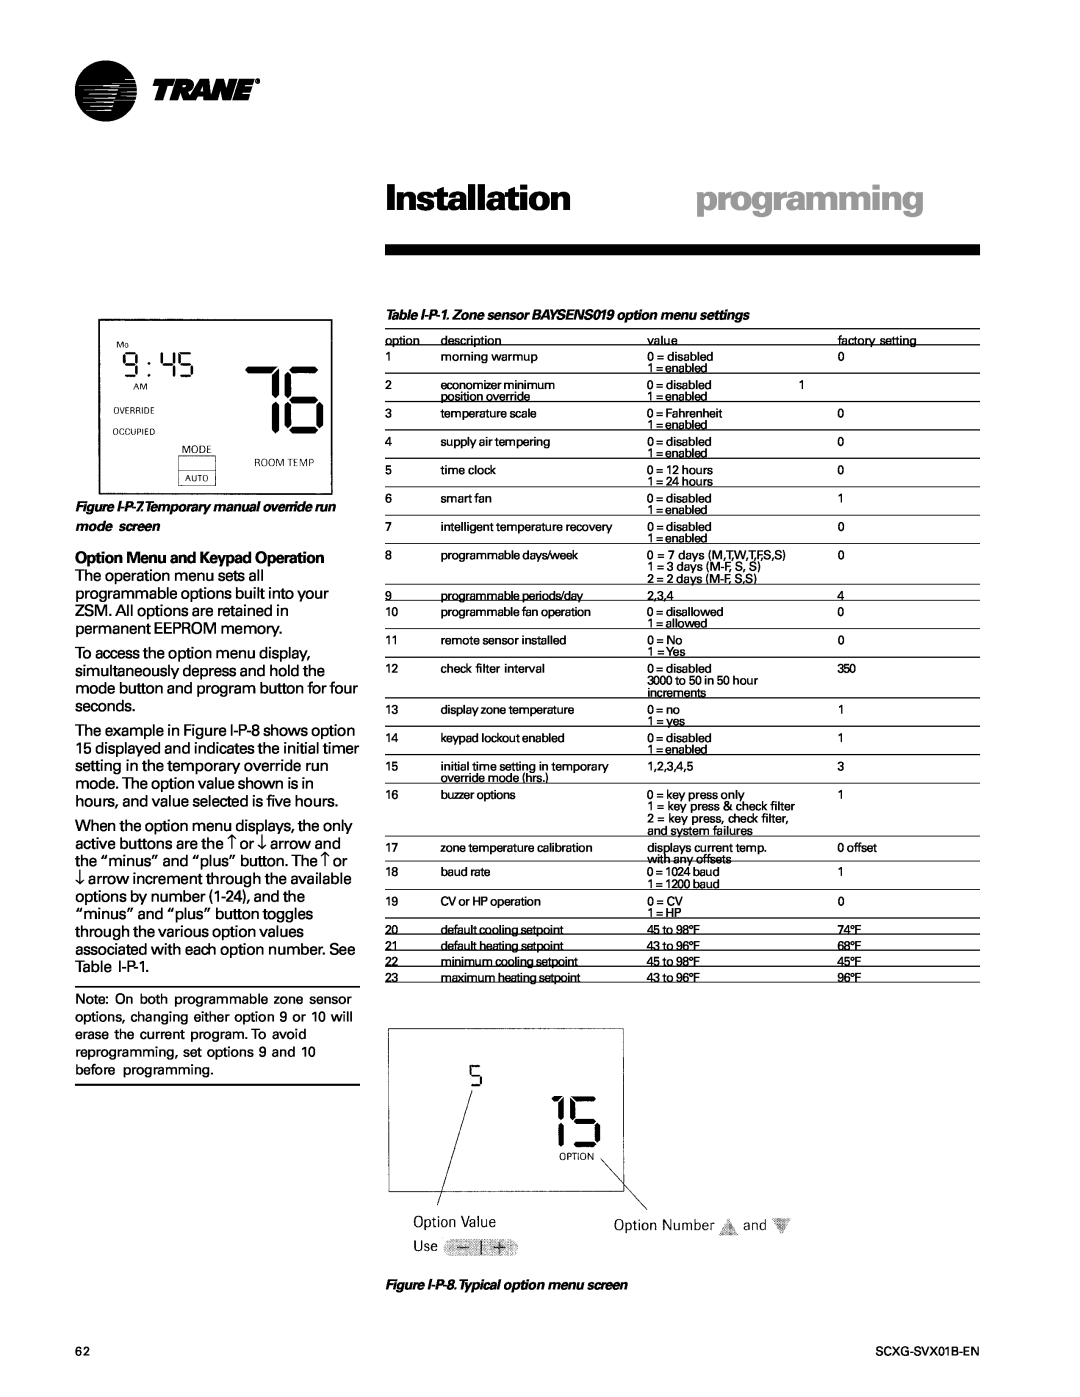 Trane SCXG-SVX01B-EN manual Installation programming, Figure I-P-8.Typicaloption menu screen 